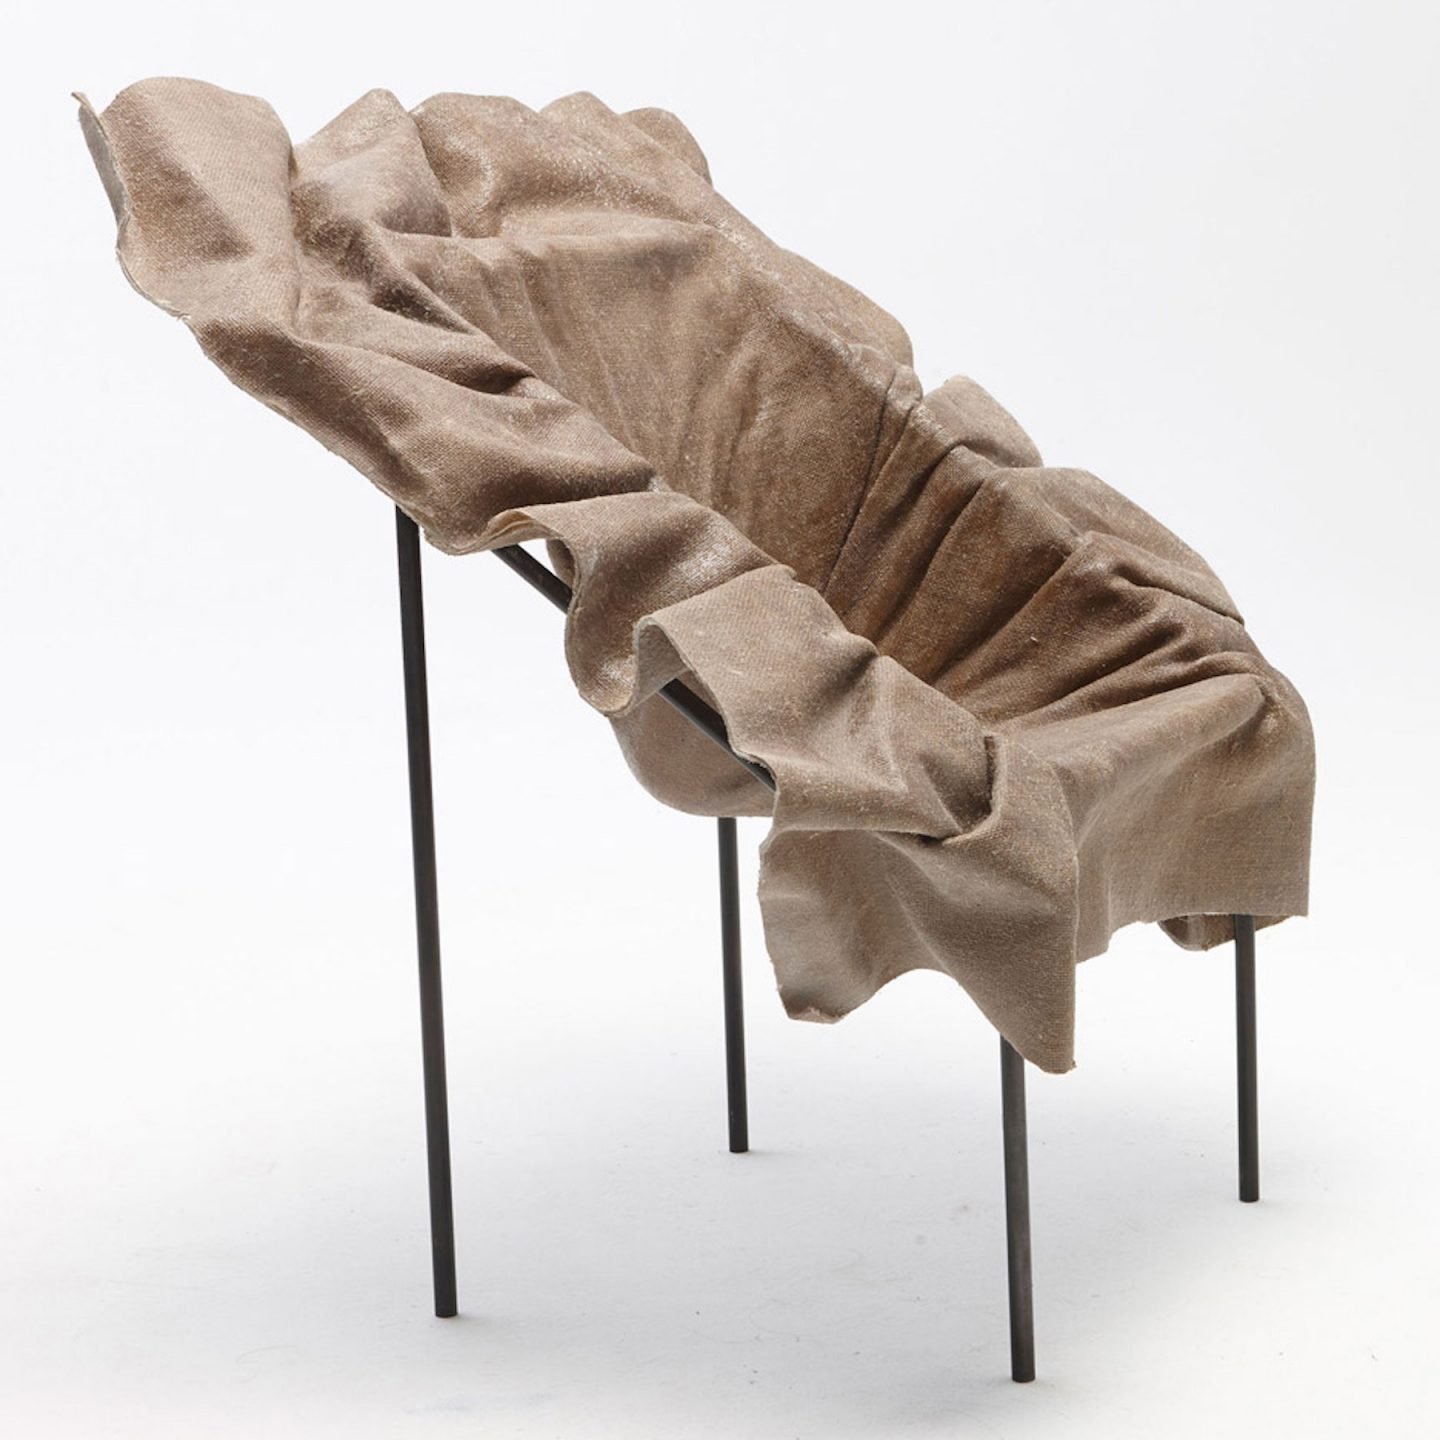 iGNANT-Design-Demeter-Fogarasi-Poetic-Furniture-Frozen-Textiles-05